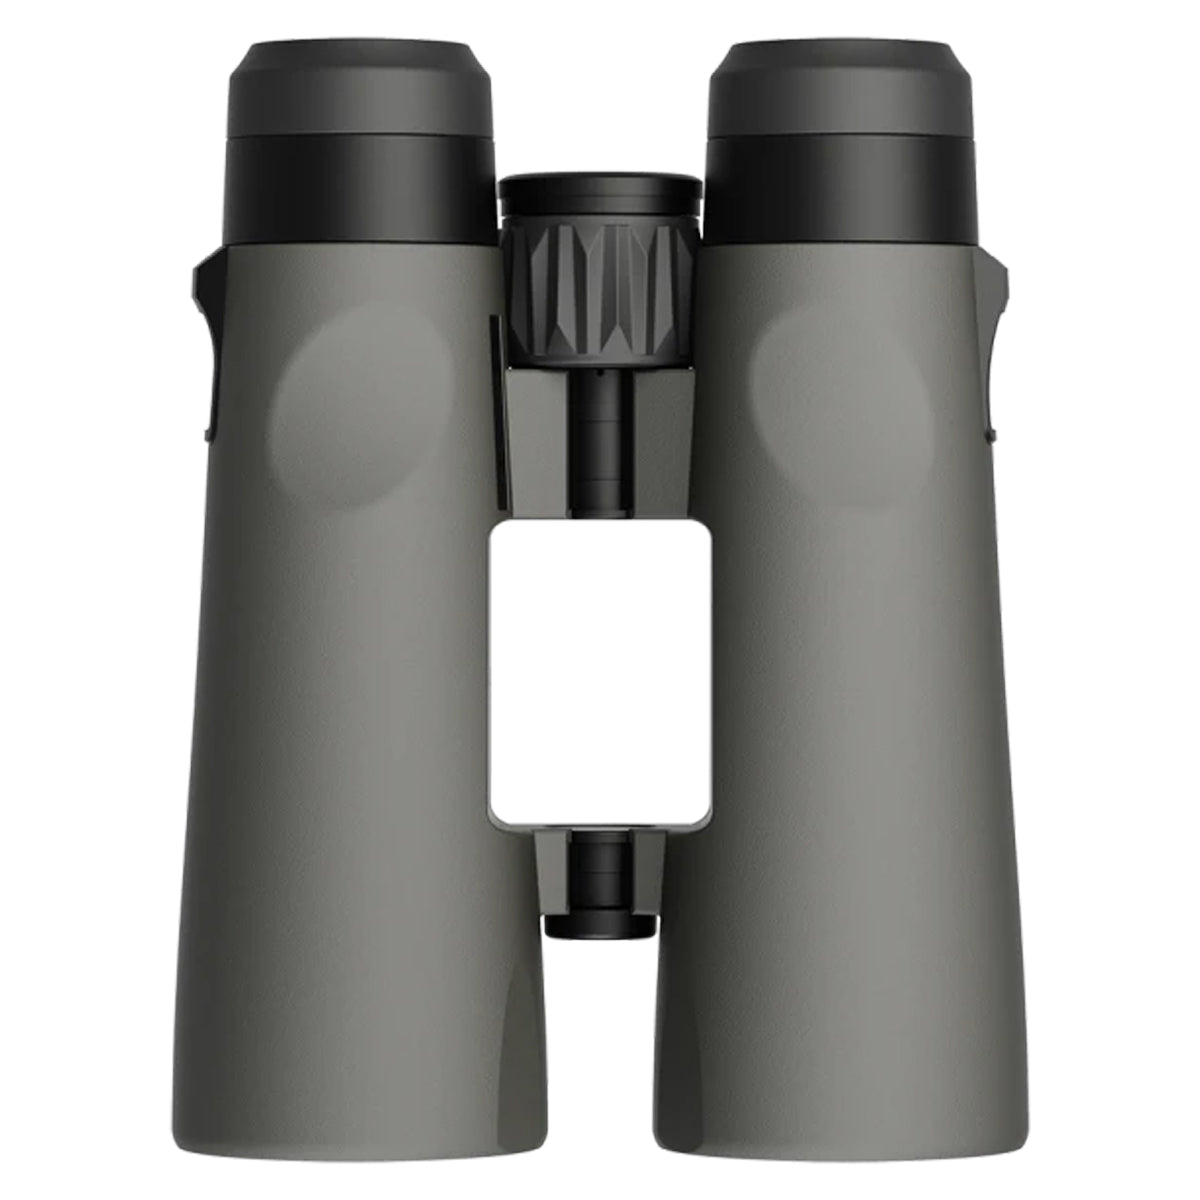 Leupold BX-4 Pro Guide HD 12x50mm Gen 2 Binocular (184763) in  by GOHUNT | Leupold - GOHUNT Shop